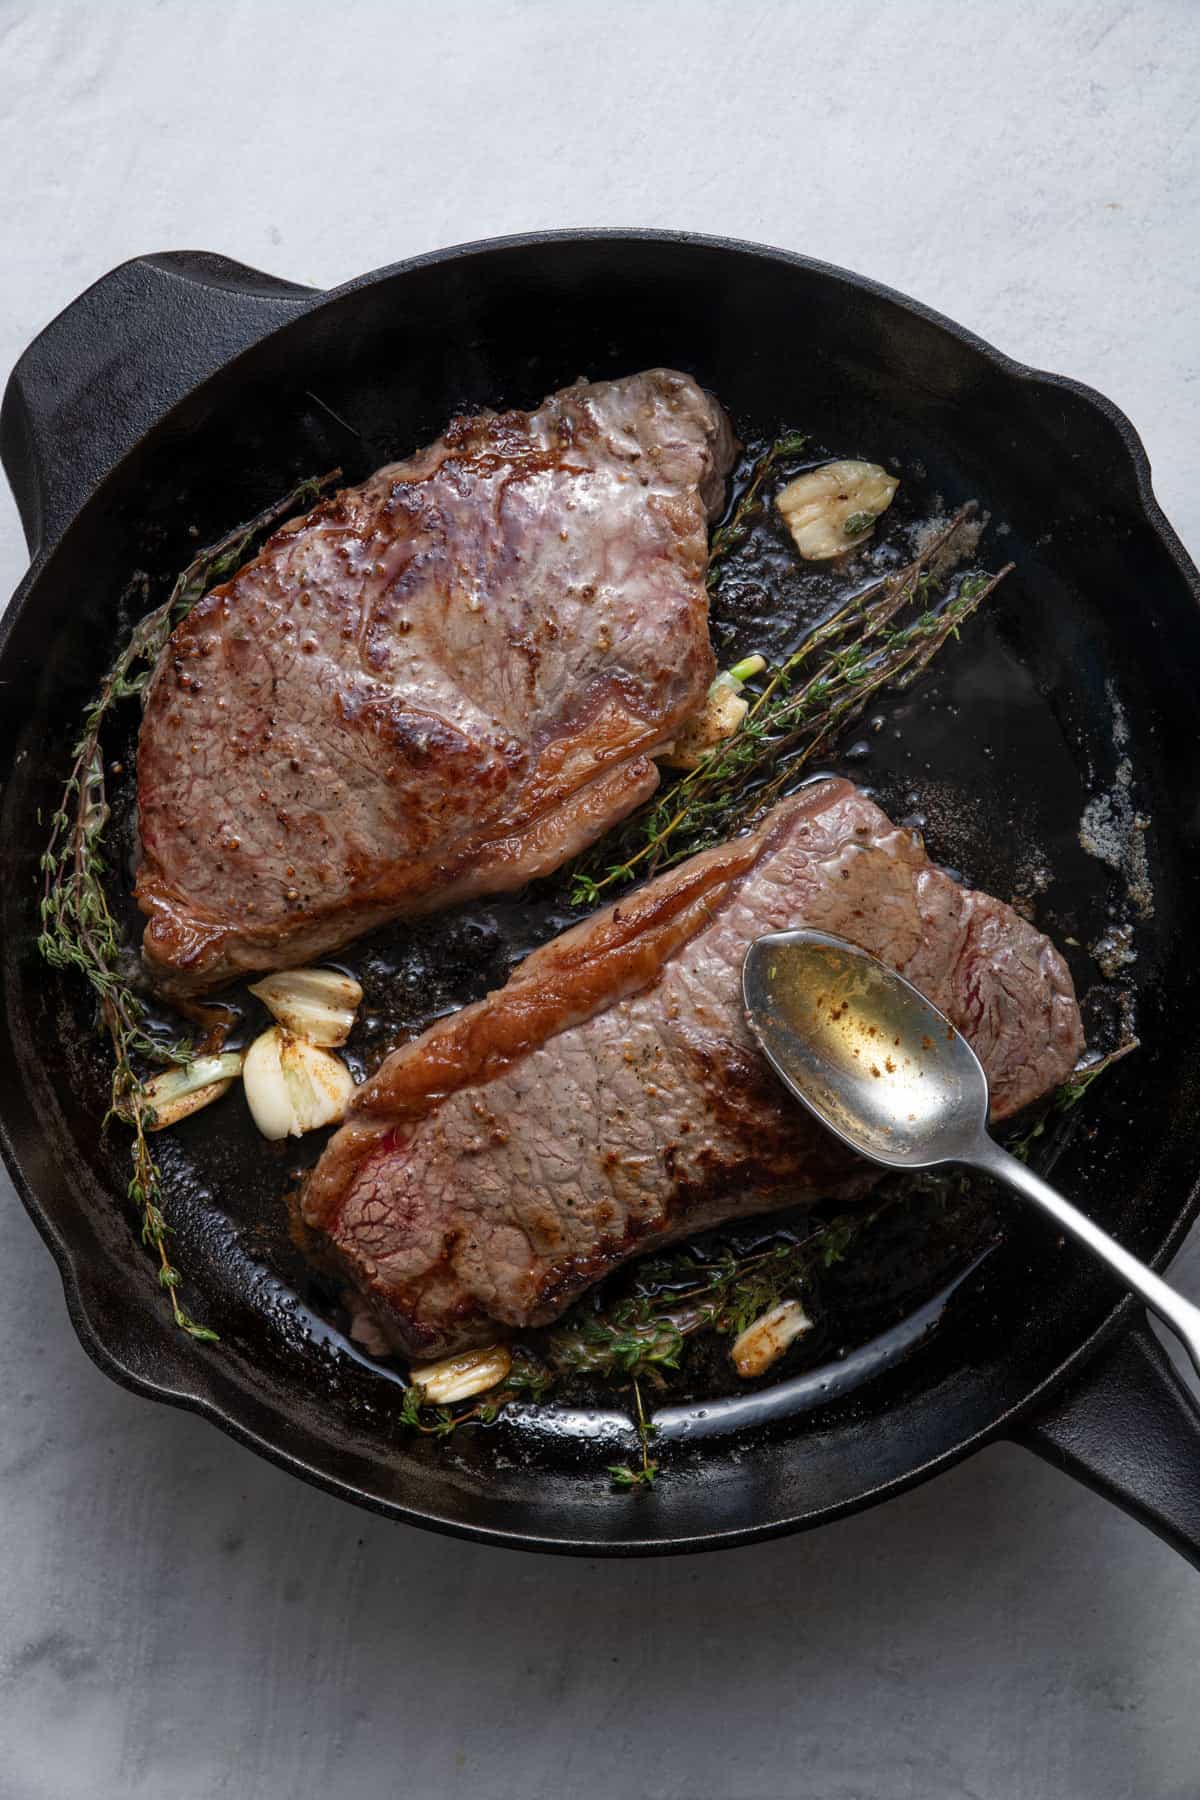 Spoon basting the steak in the skillet